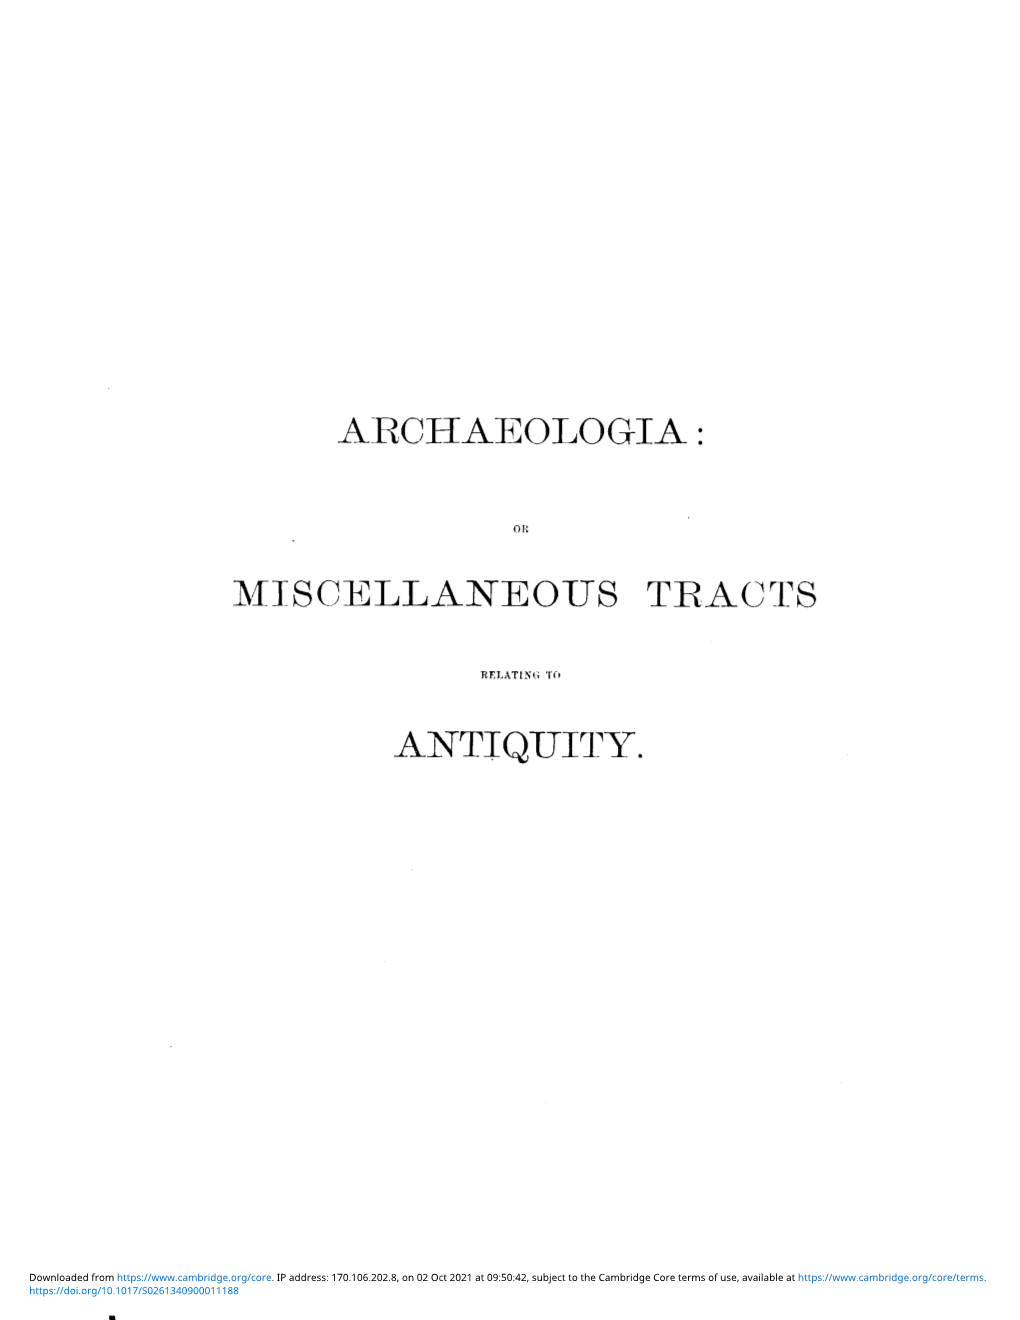 Aechaeolog-Ia: Miscellaneous Teacts Antiquity